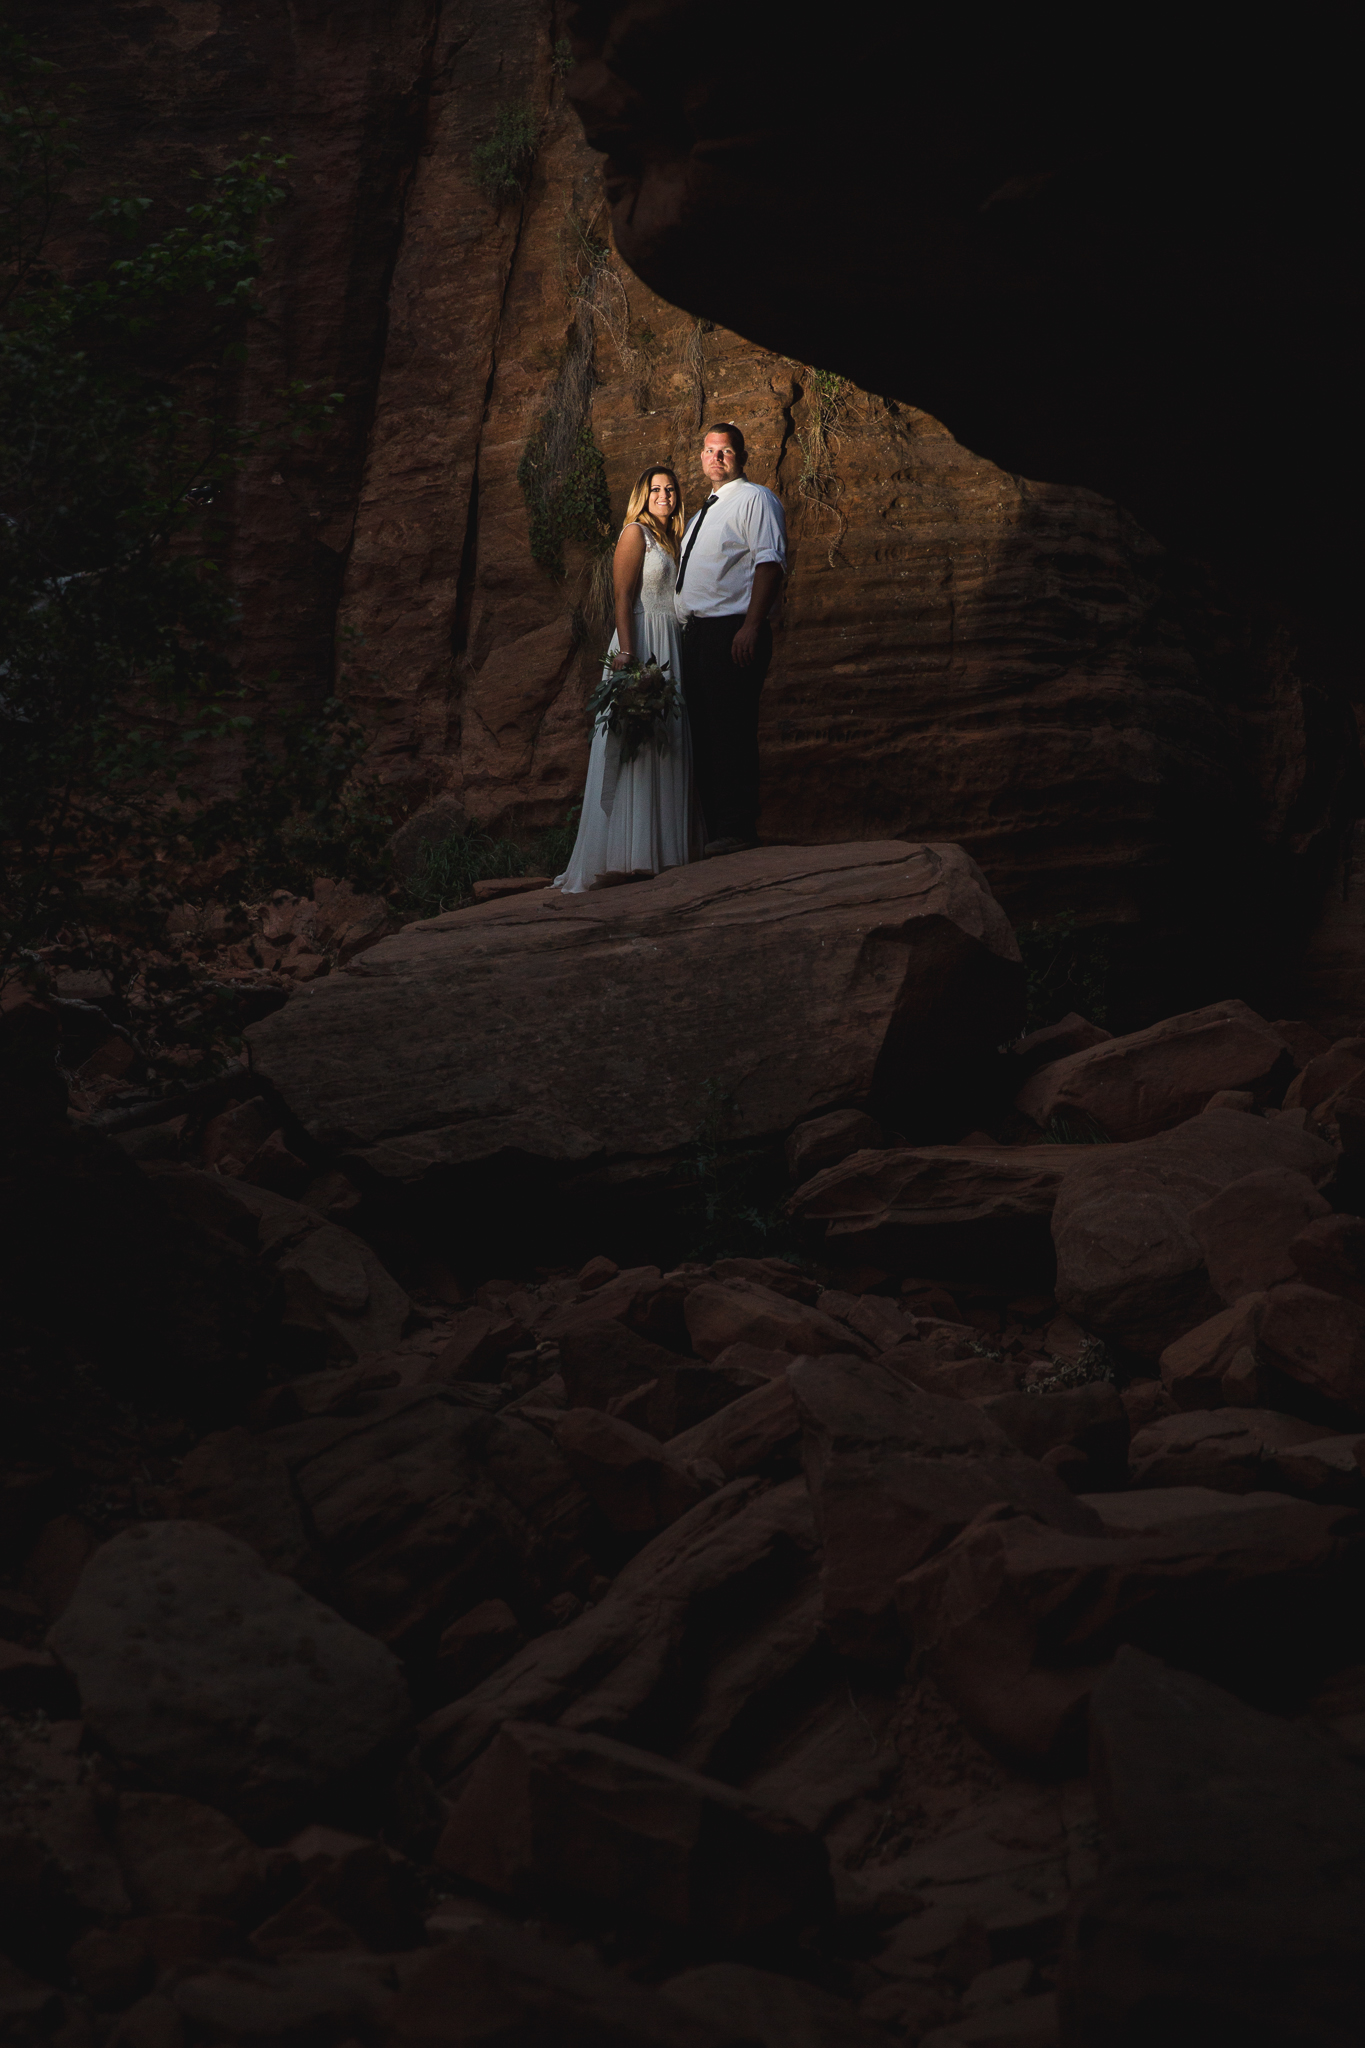  Zion National Park Elopement - Danielle Salerno Photography - Dana and Jason - Adventure Photography , Elopement Photographer 